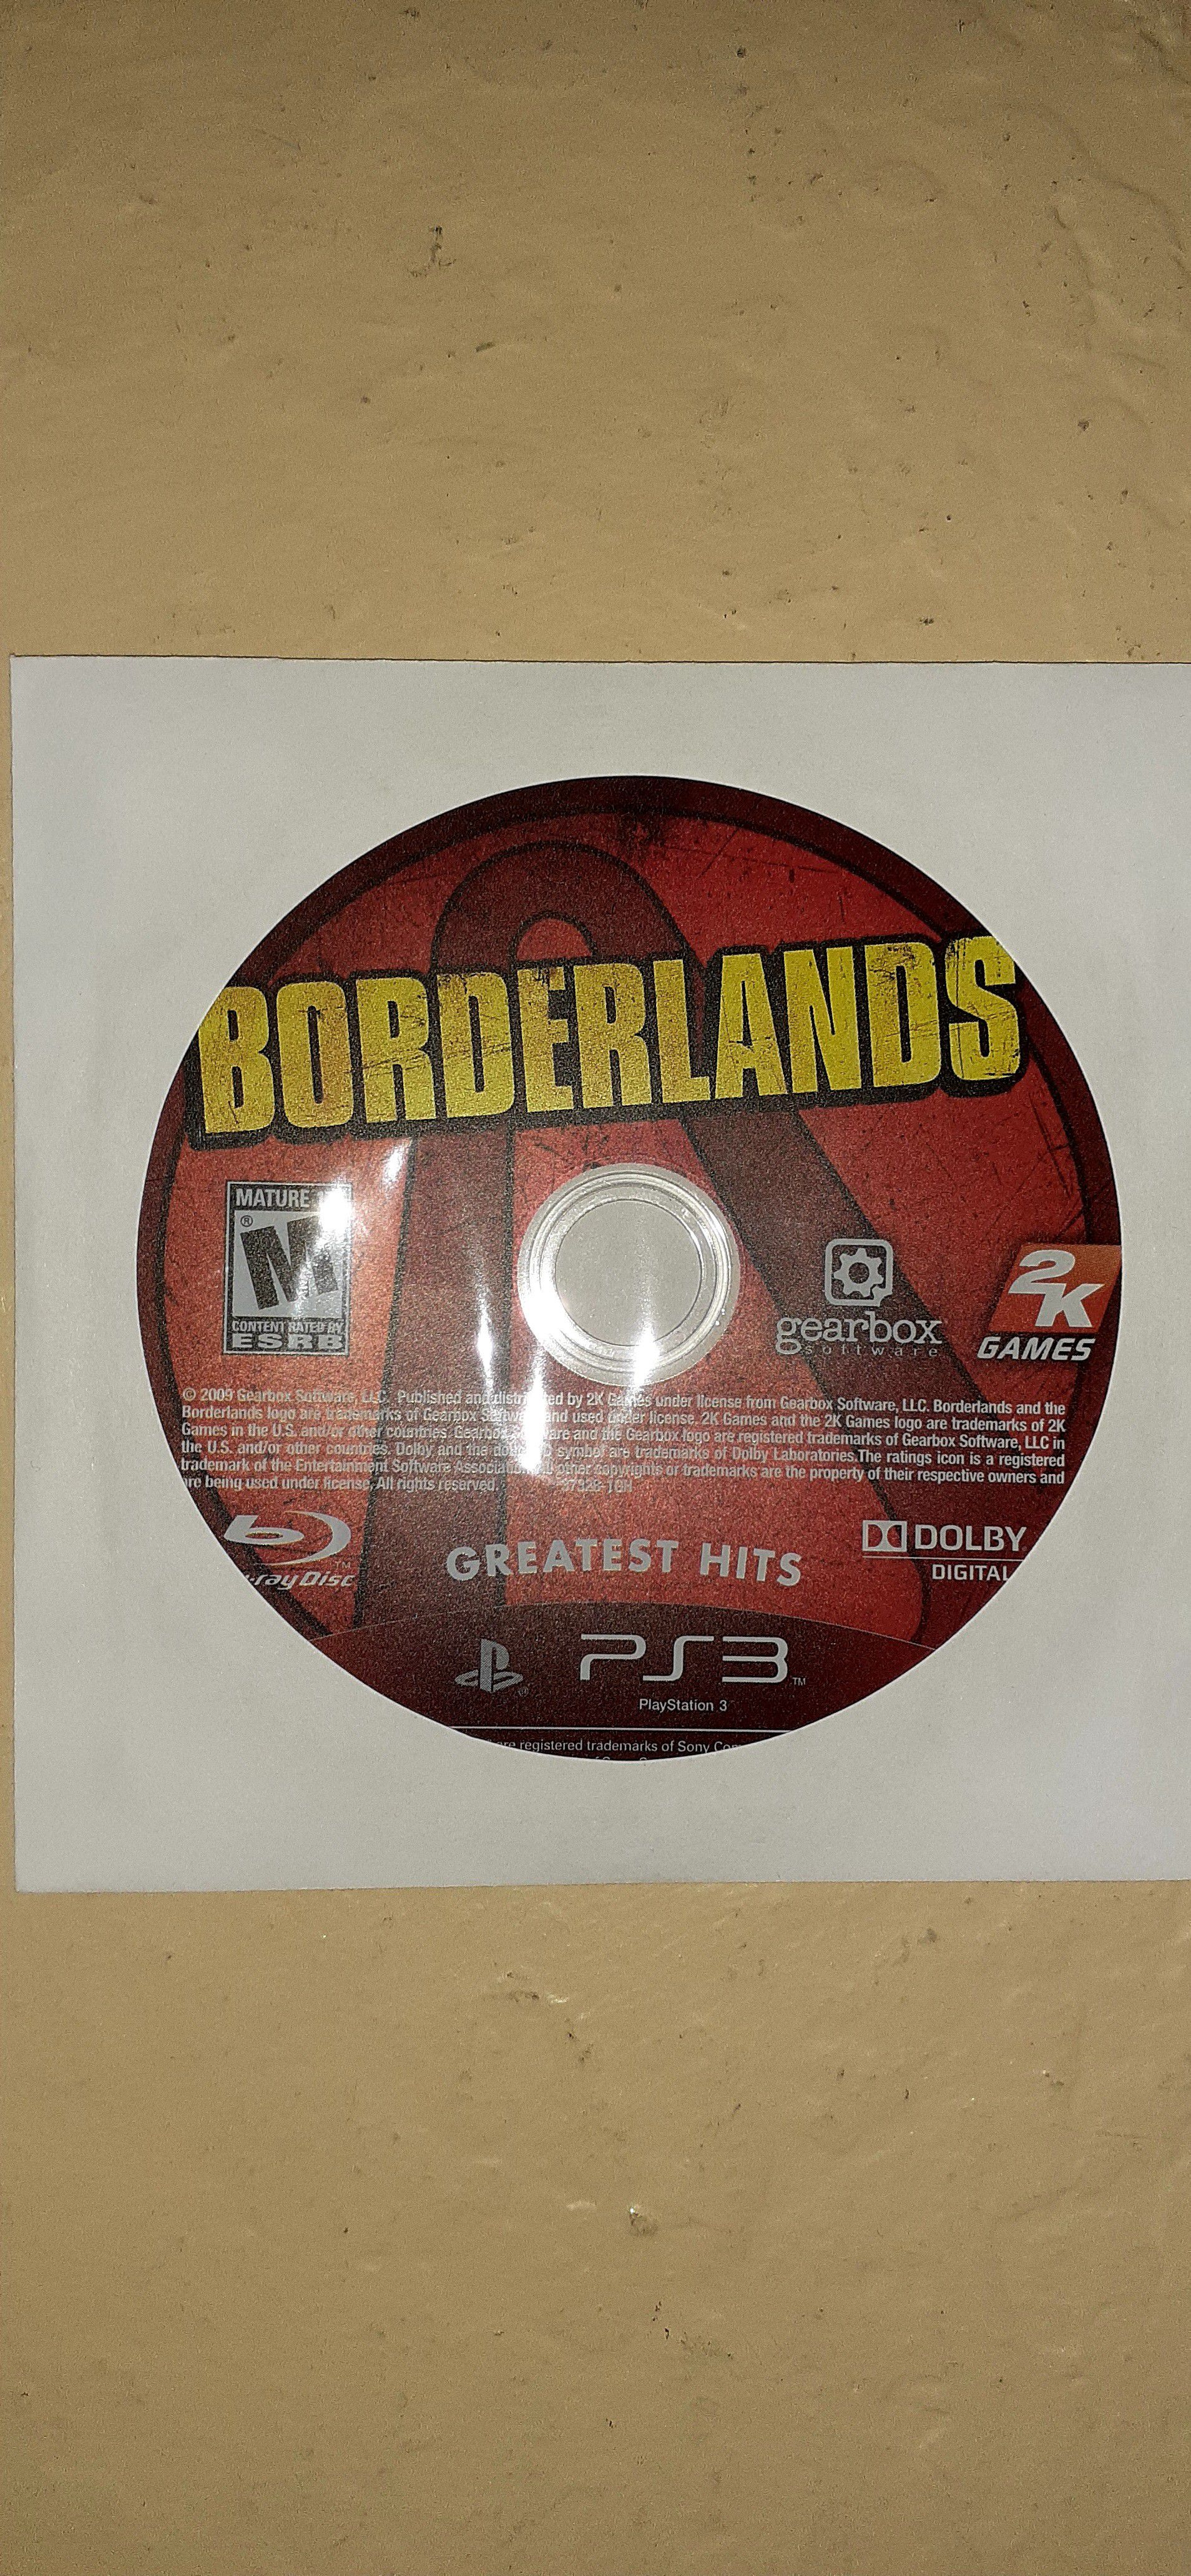 PS3 Borderlands